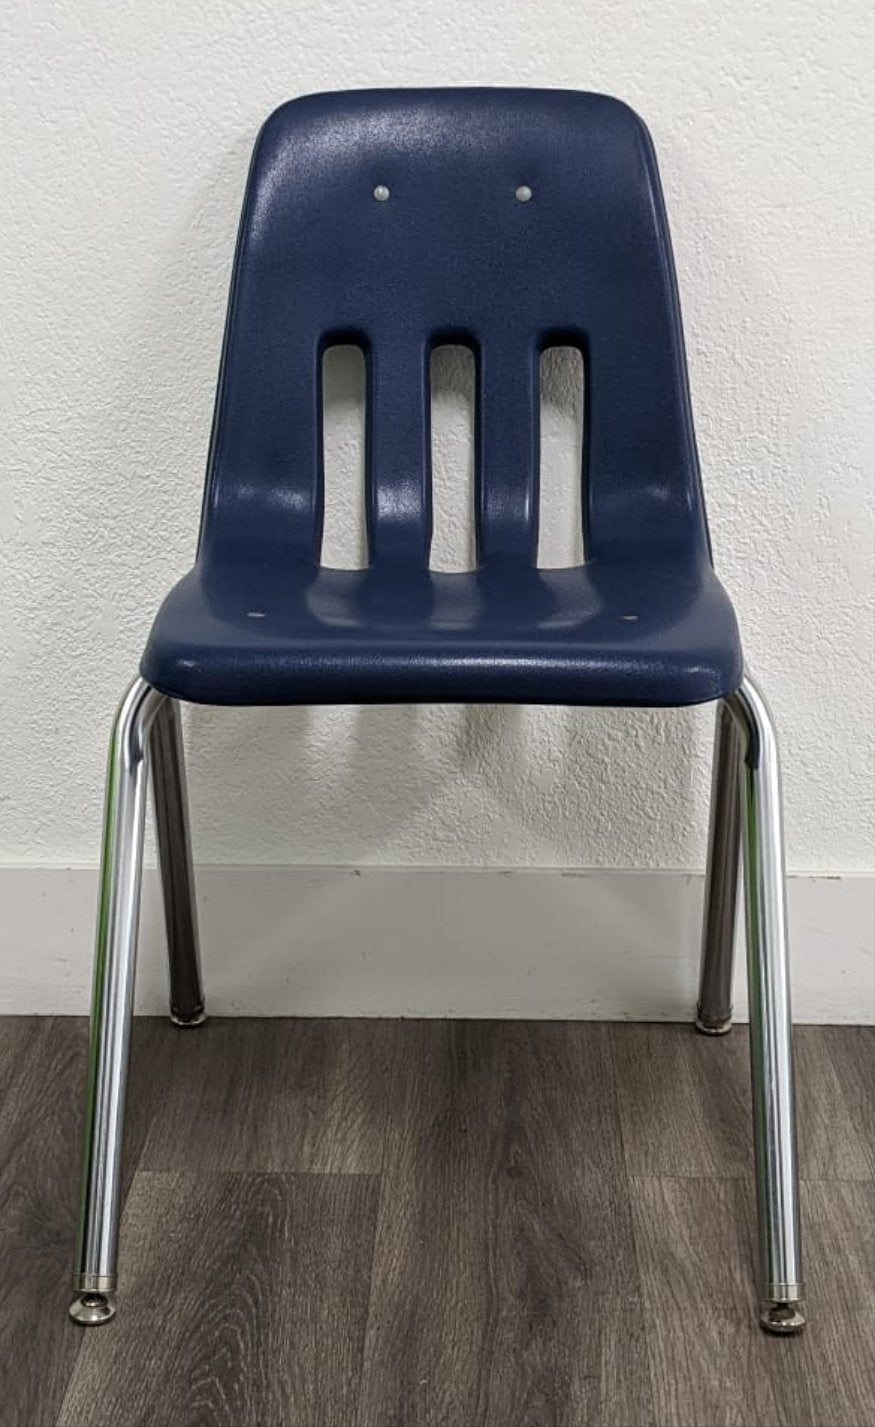 18 inch Virco 9000 Series Student Chair - Navy Blue (RF)